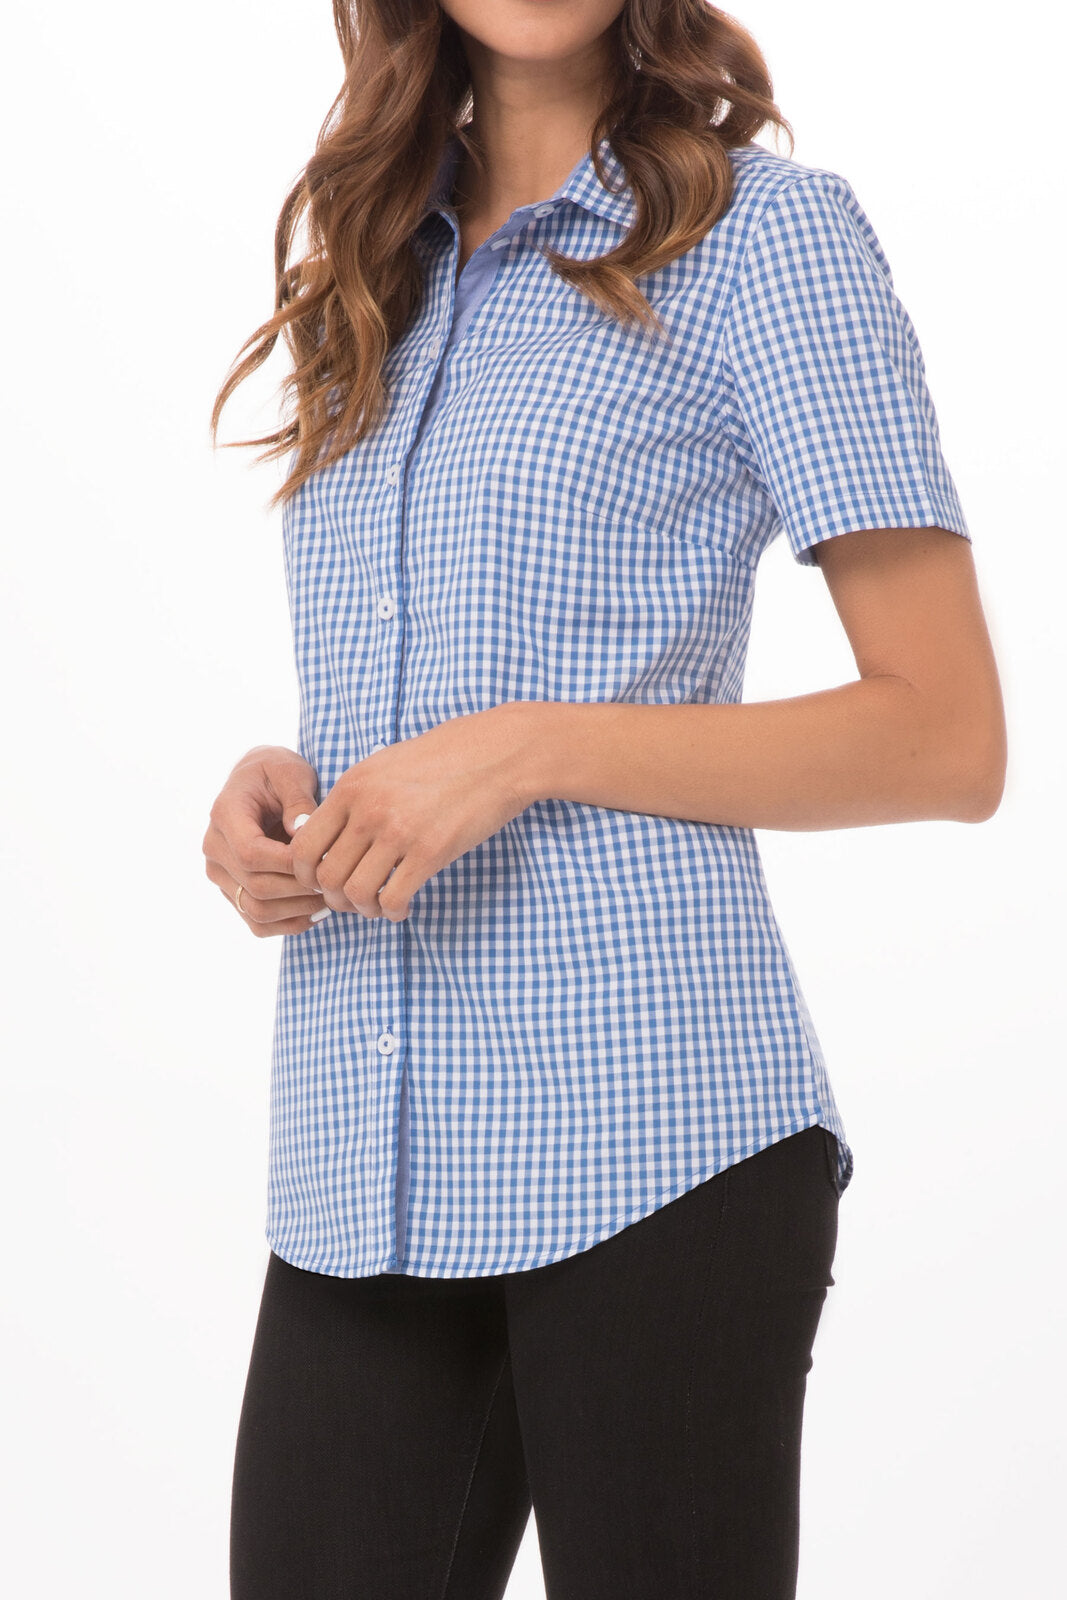 Chef Works - Women's Modern Gingham Short Sleeve Dress Shirt